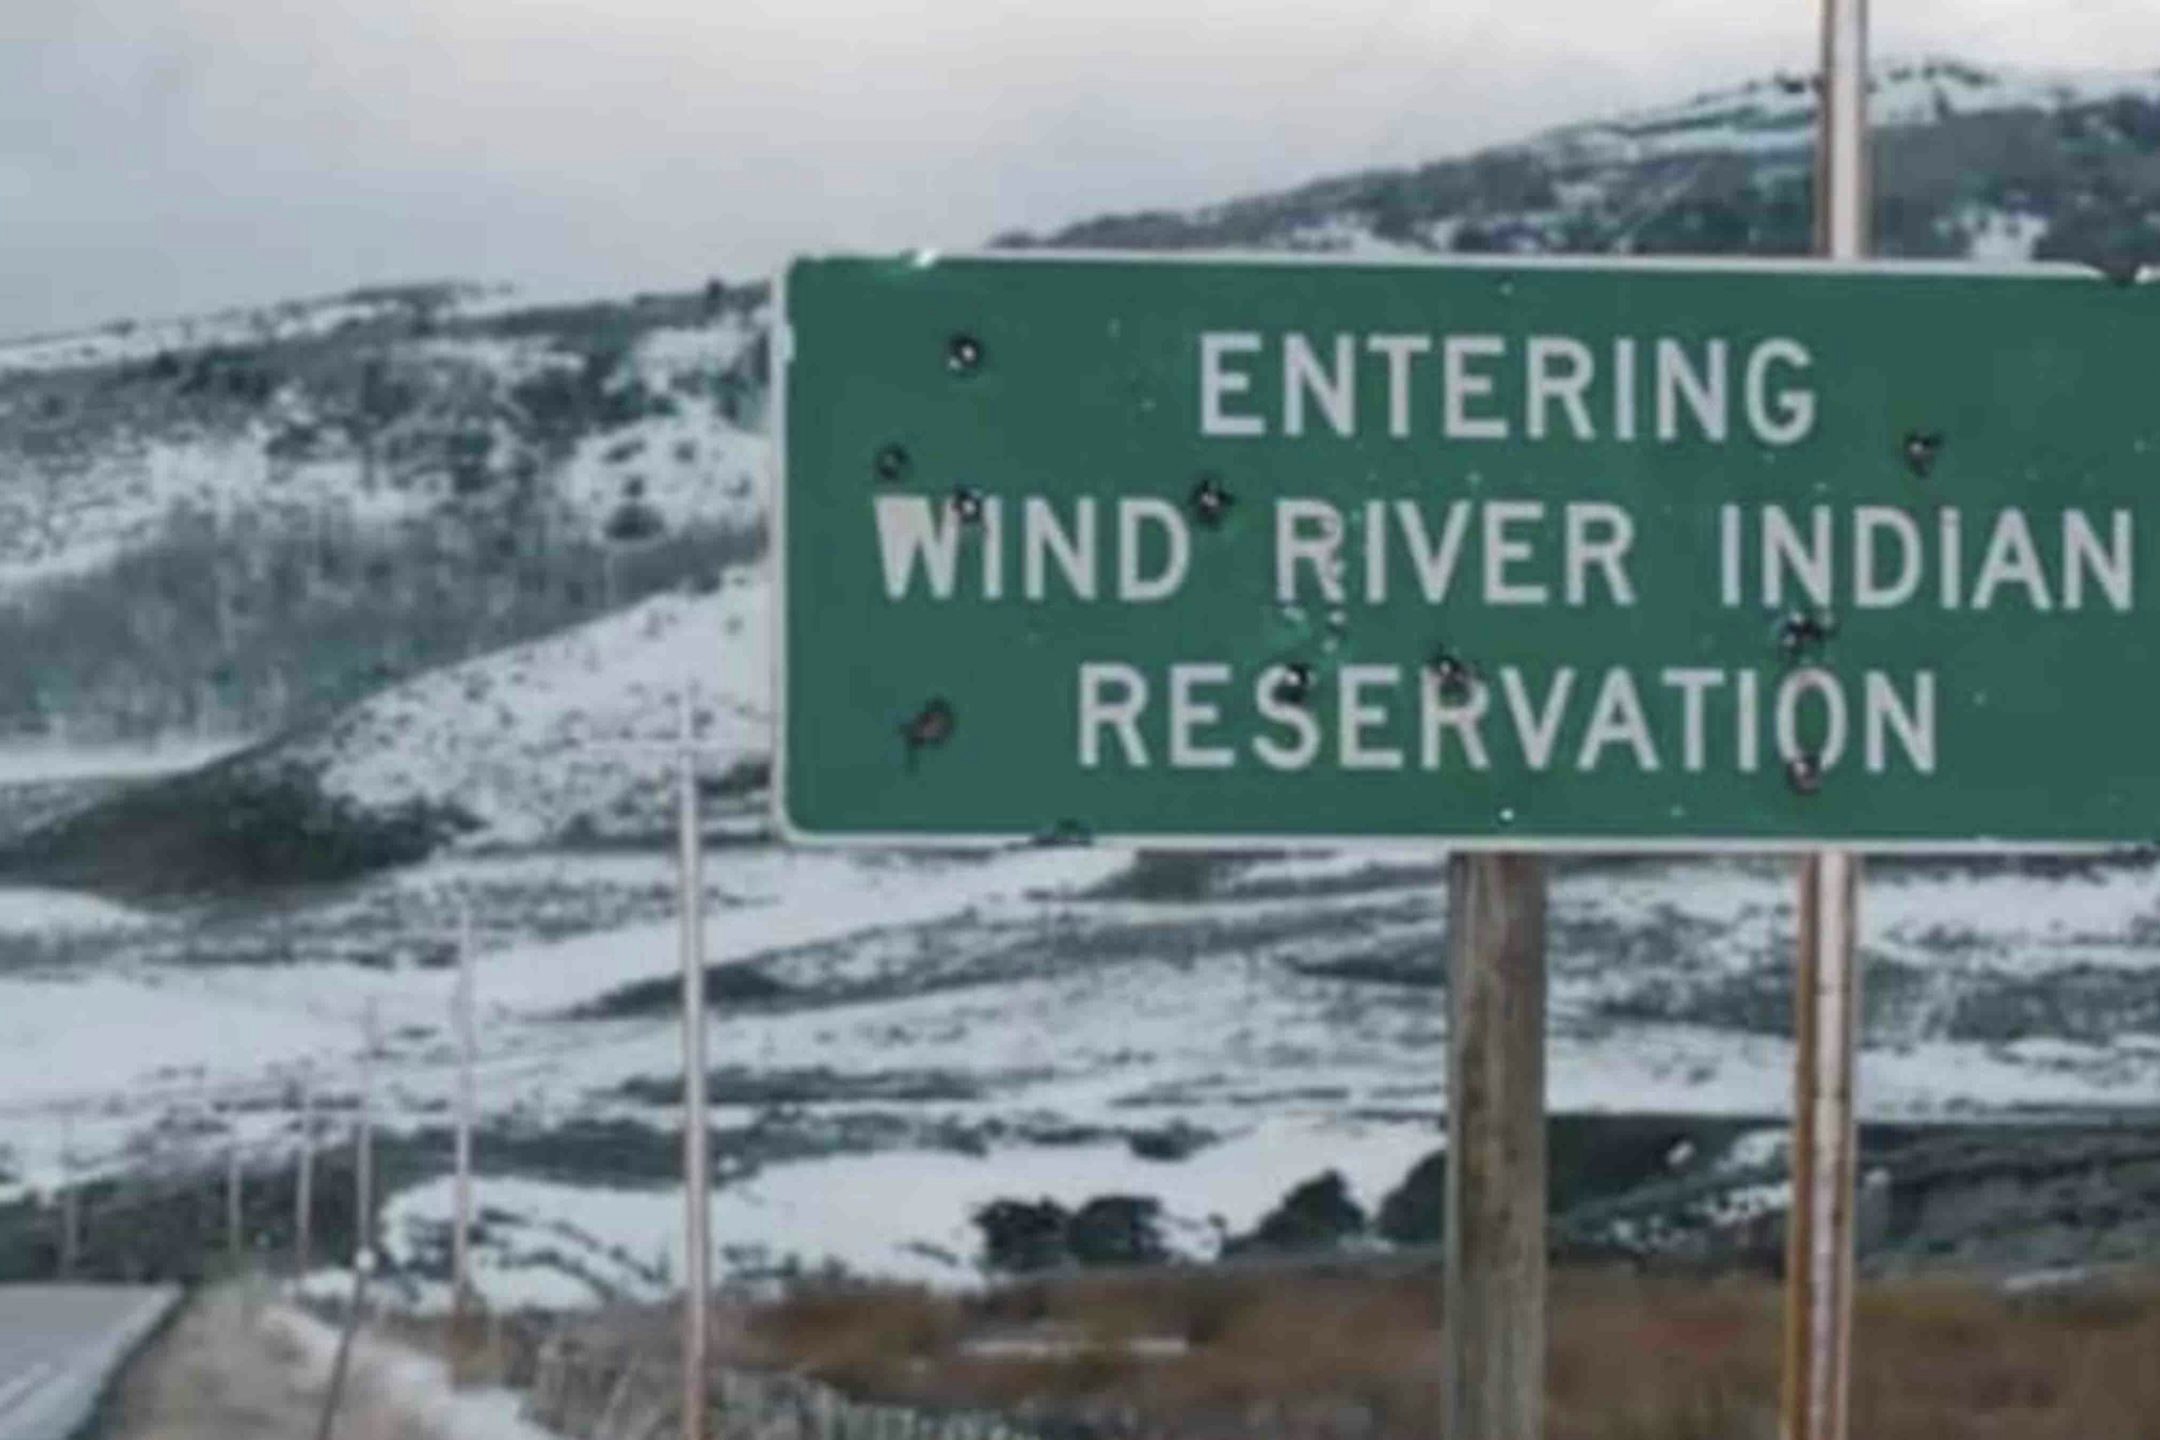 Wind river reservation sign 3 16 22 scaled